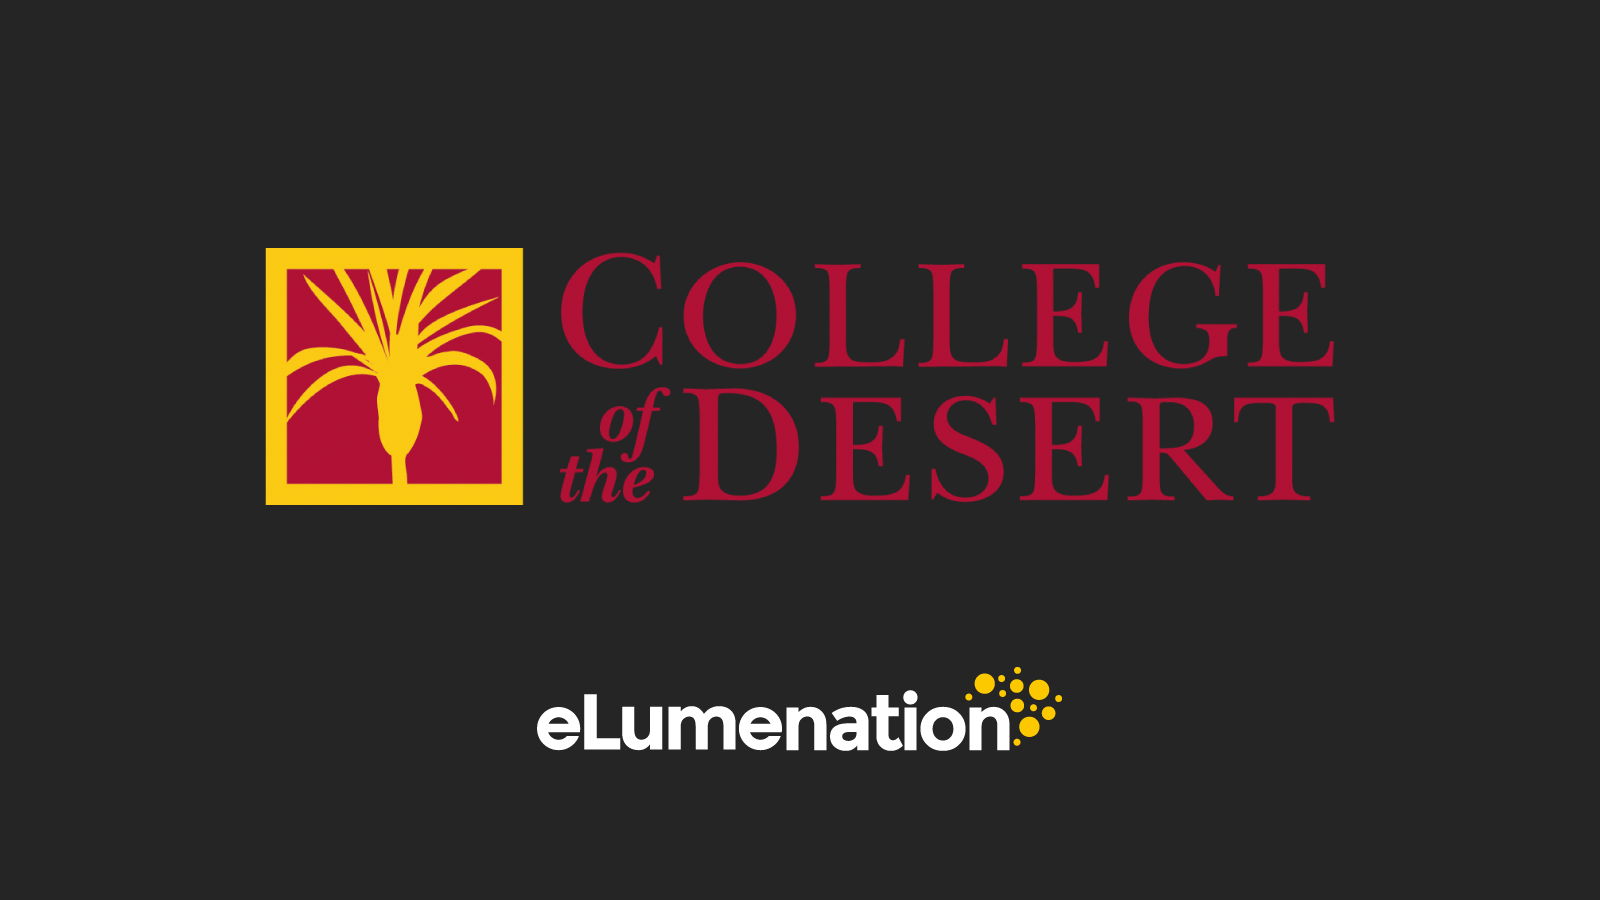 College of the Desert: eLumenation